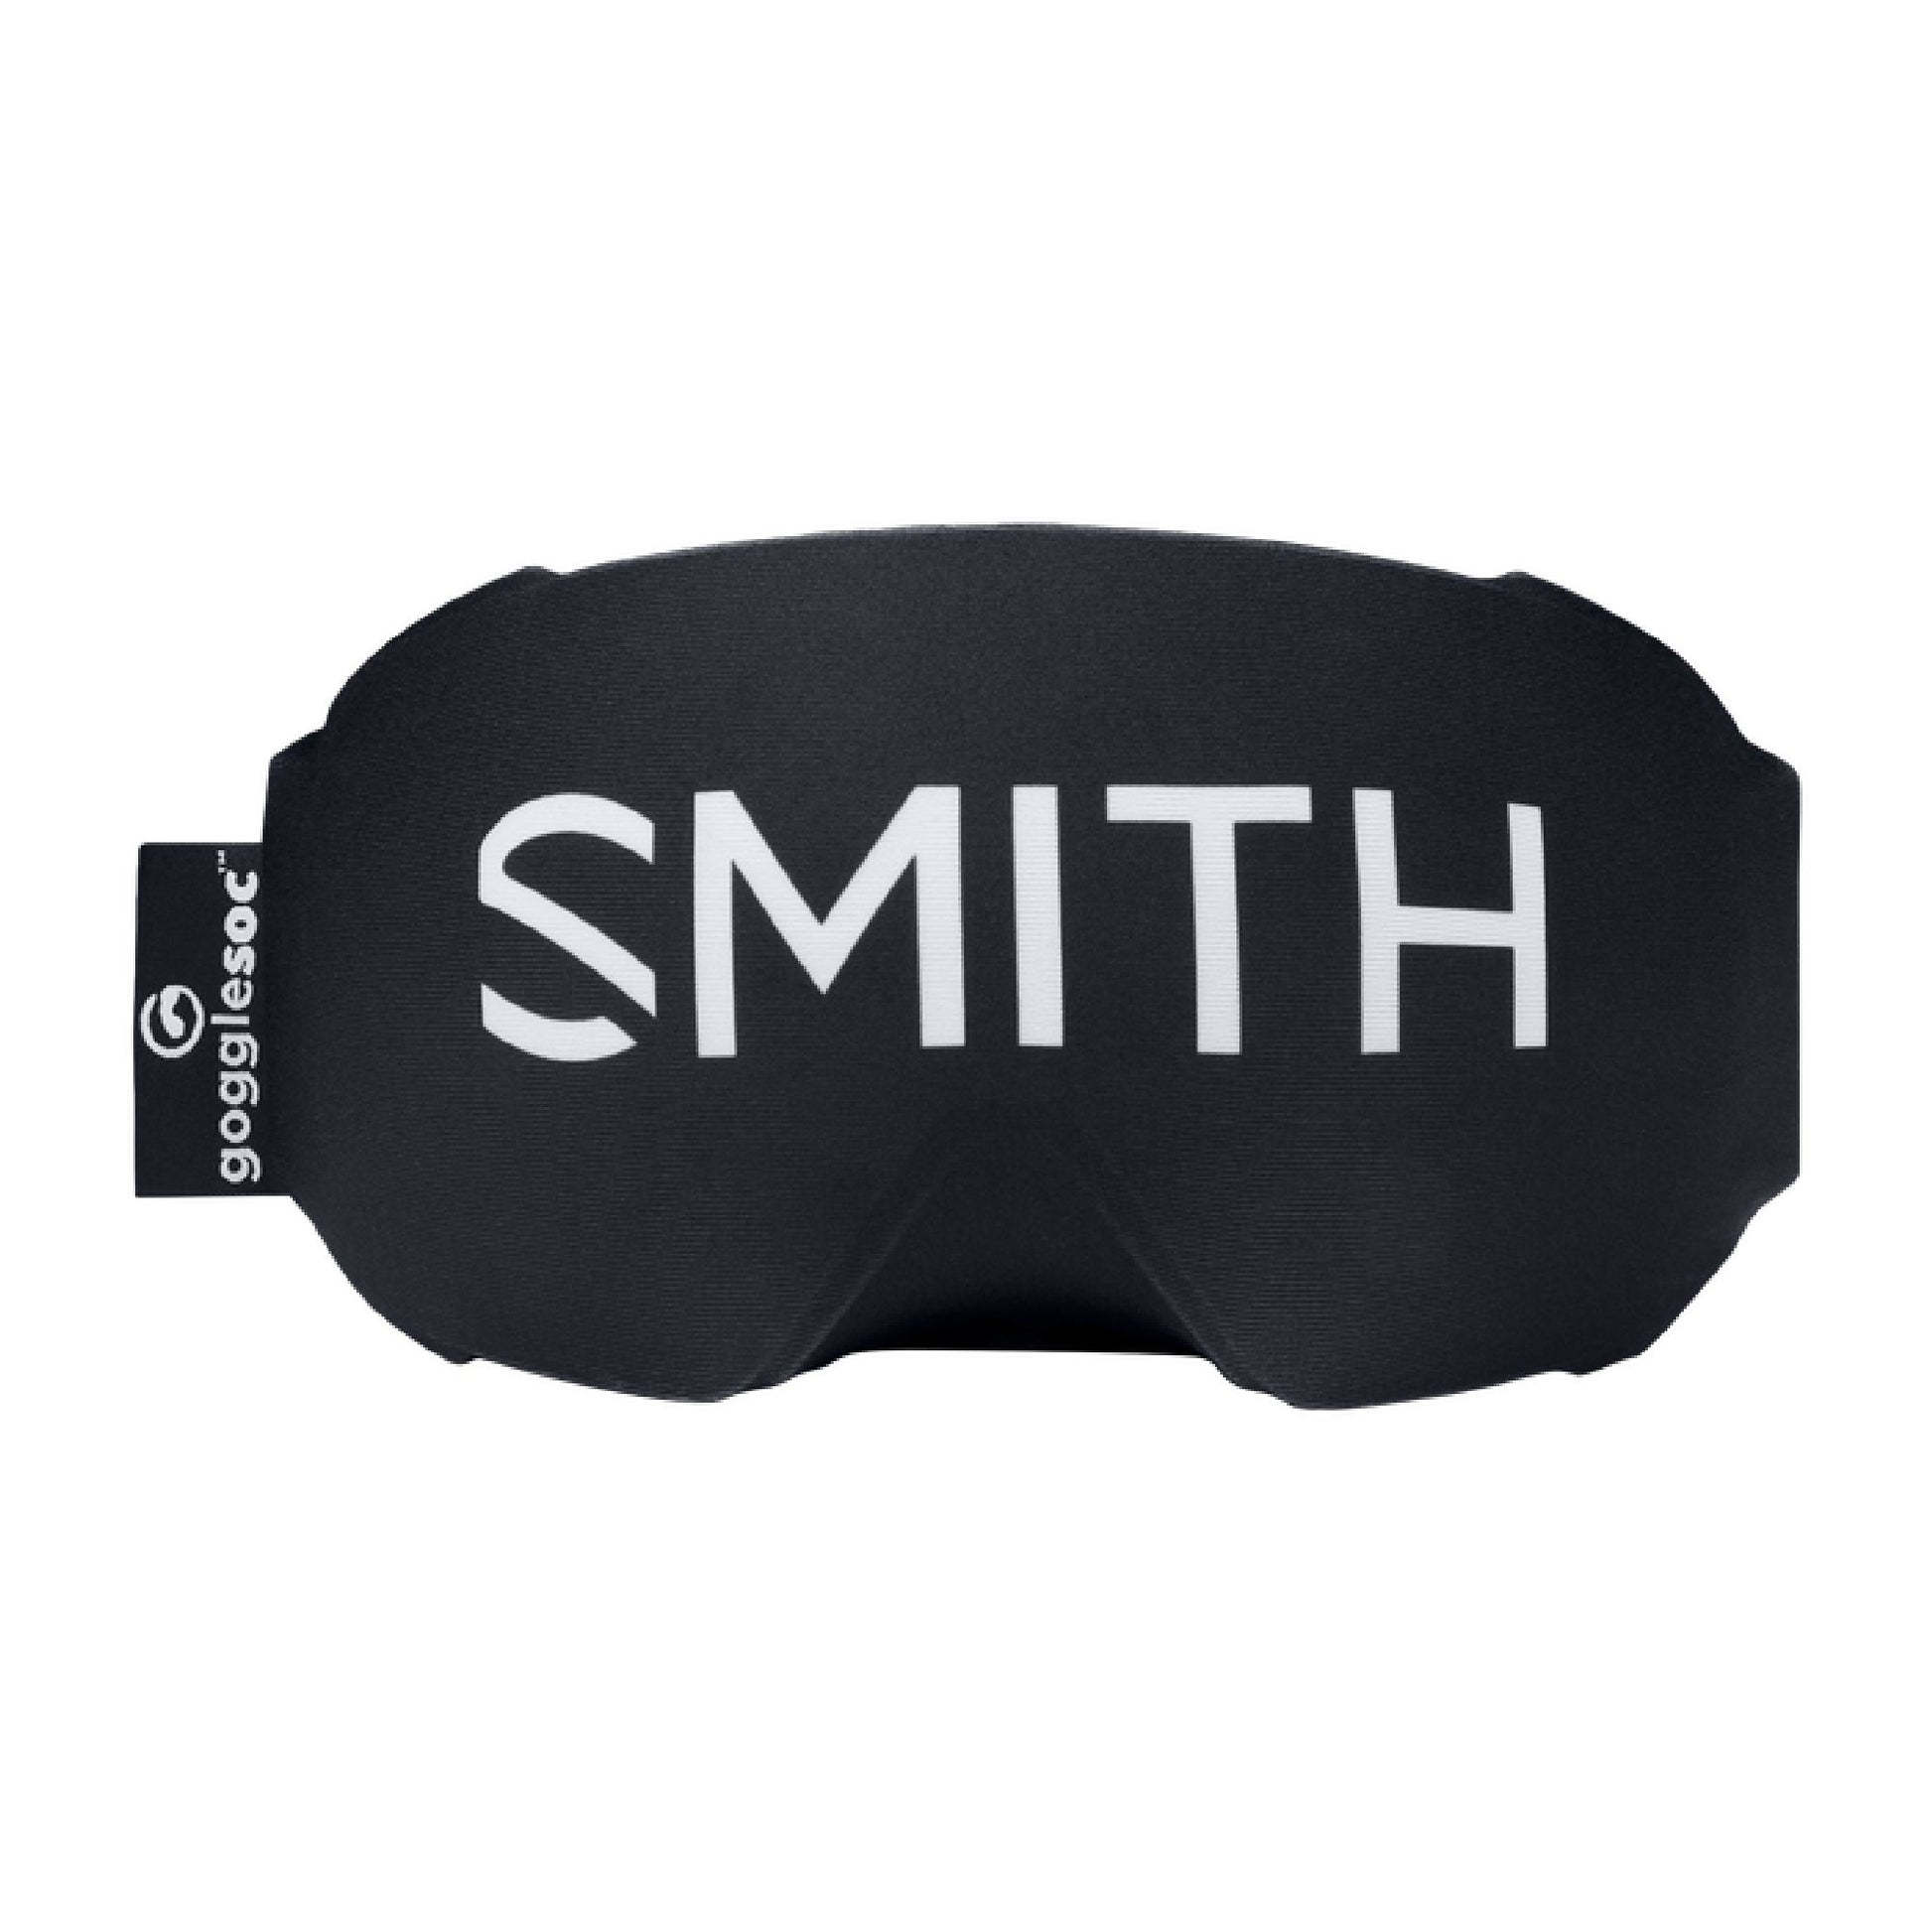 Smith I/O MAG XL Snow Goggle Blackout ChromaPop Sun Black Snow Goggles